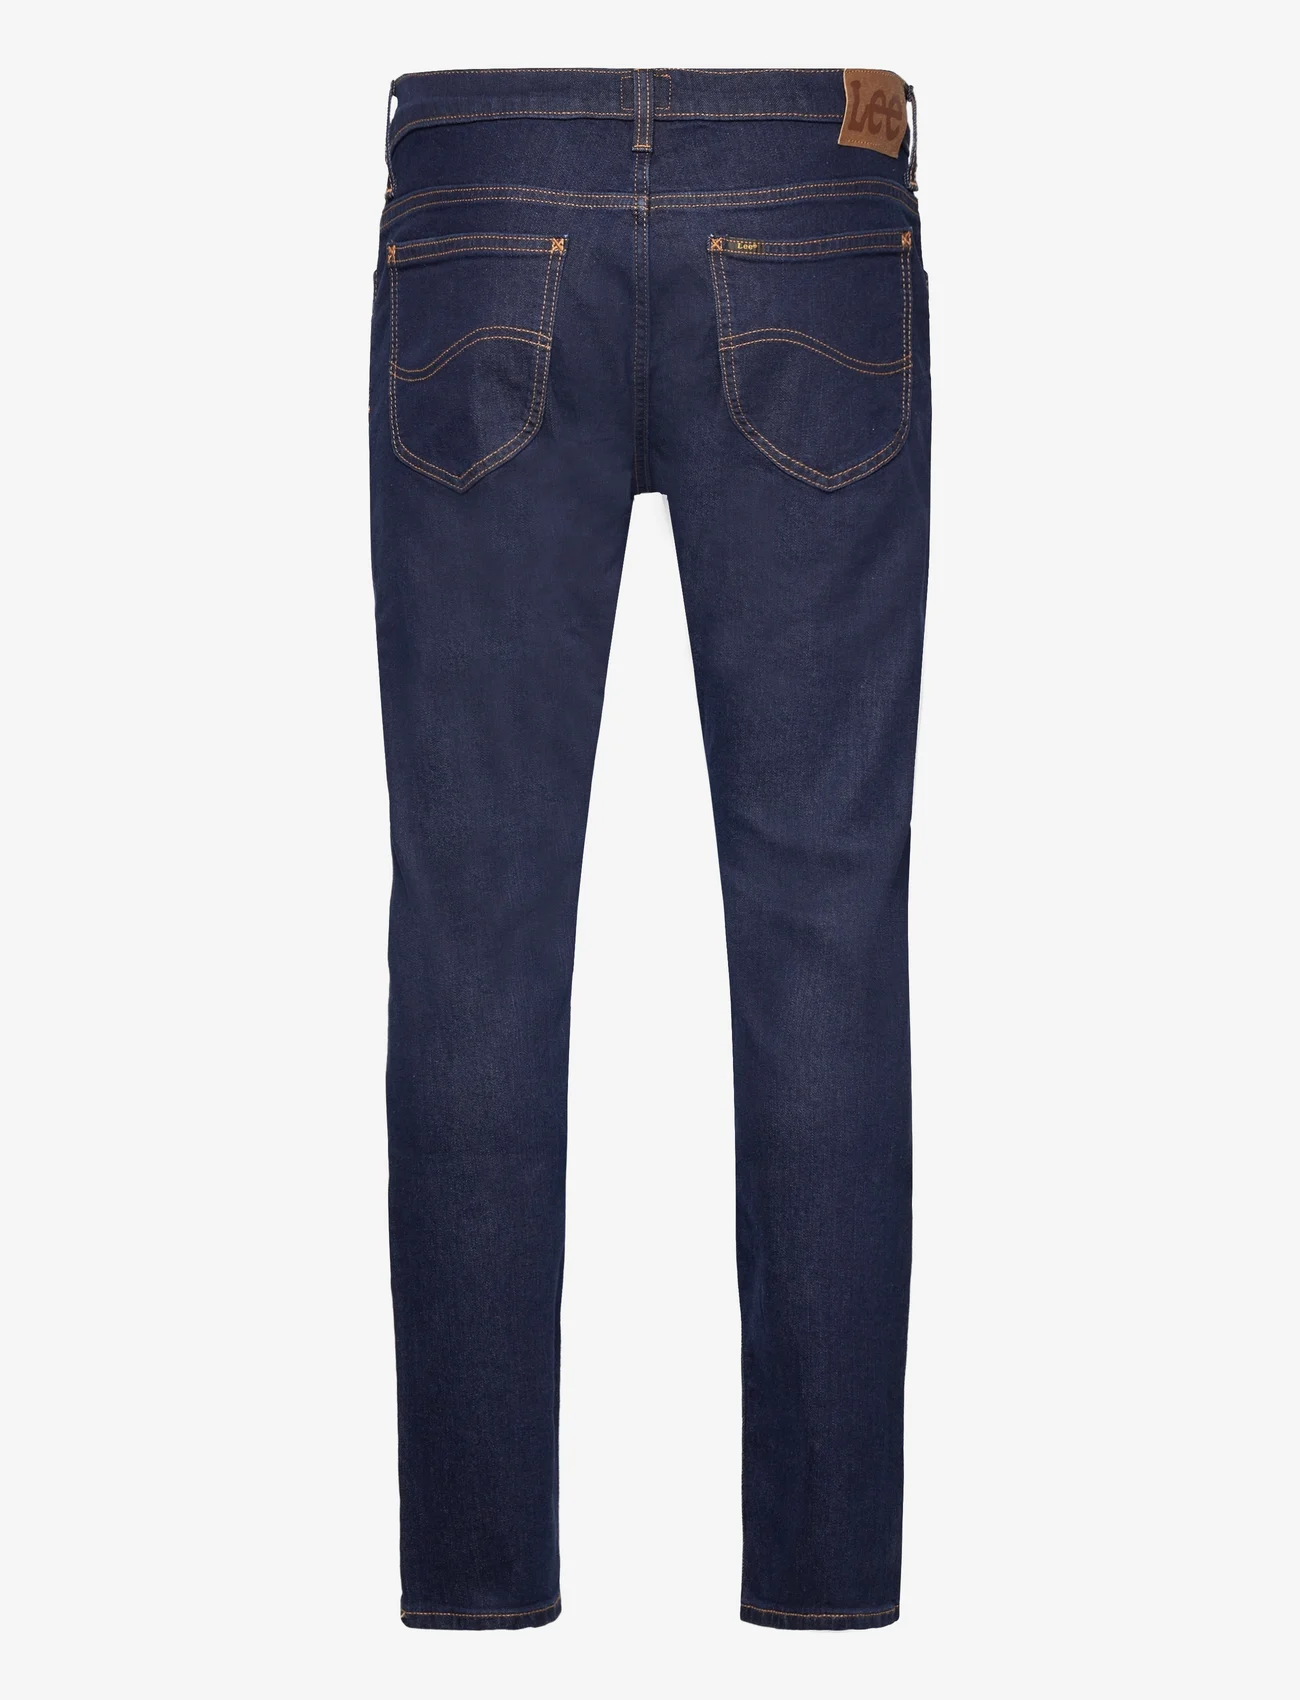 Lee Jeans - RIDER - regular jeans - rinse - 1